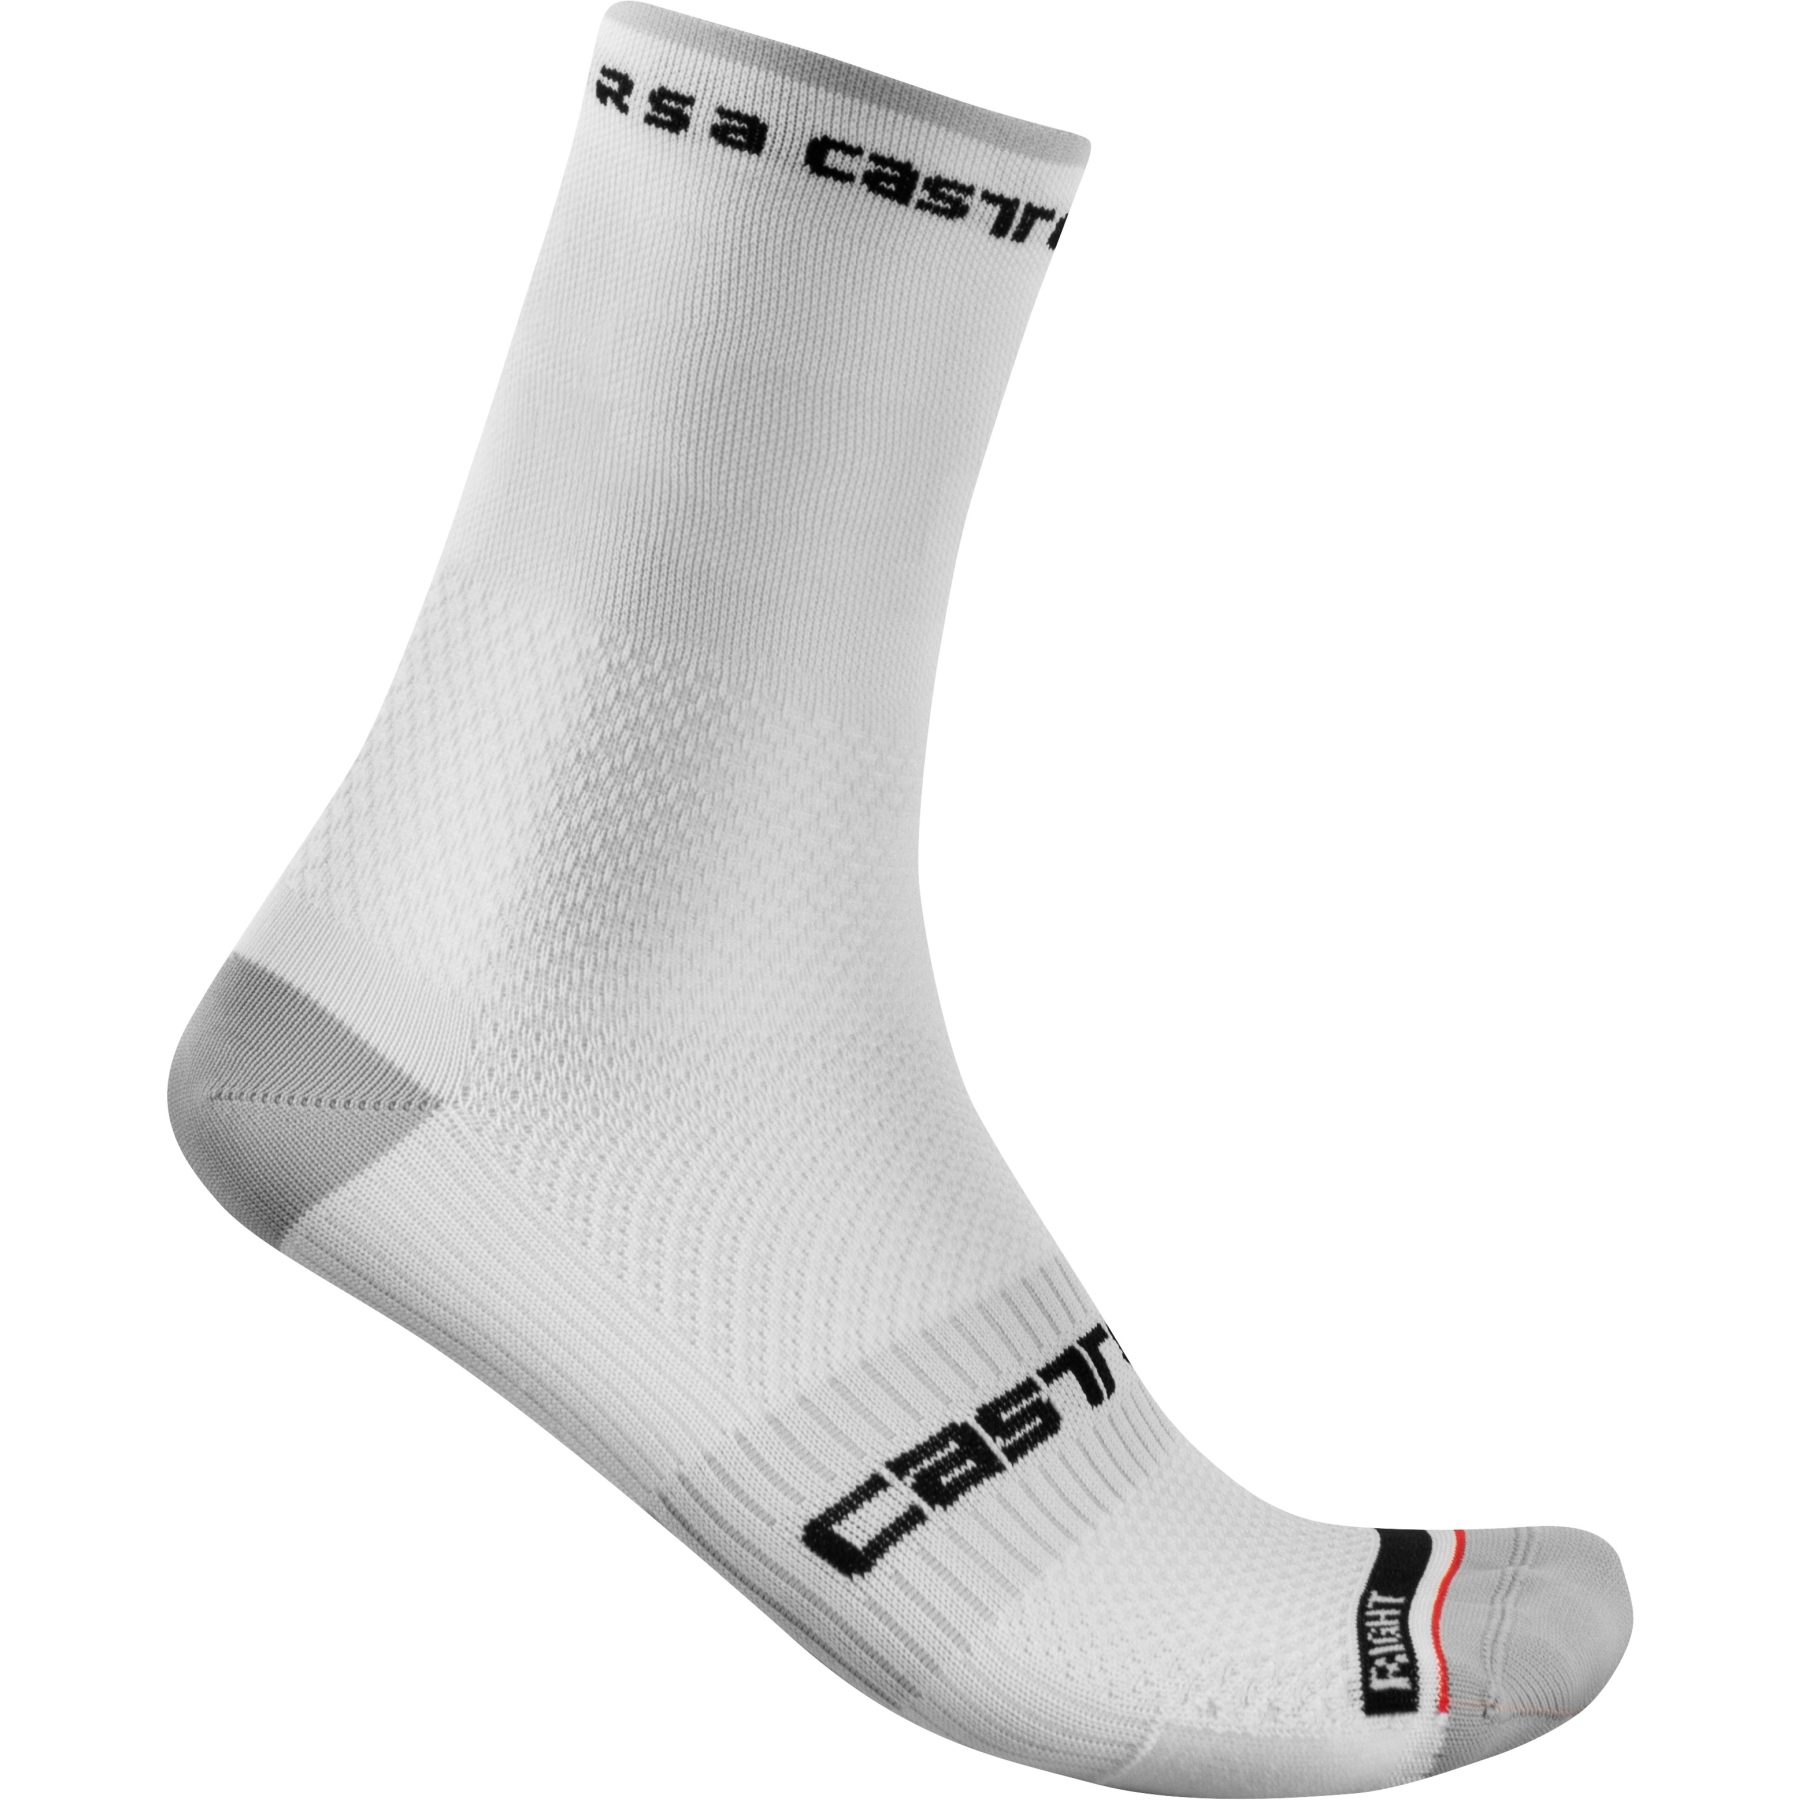 Image of Castelli Rosso Corsa Pro 15 Socks - white 001